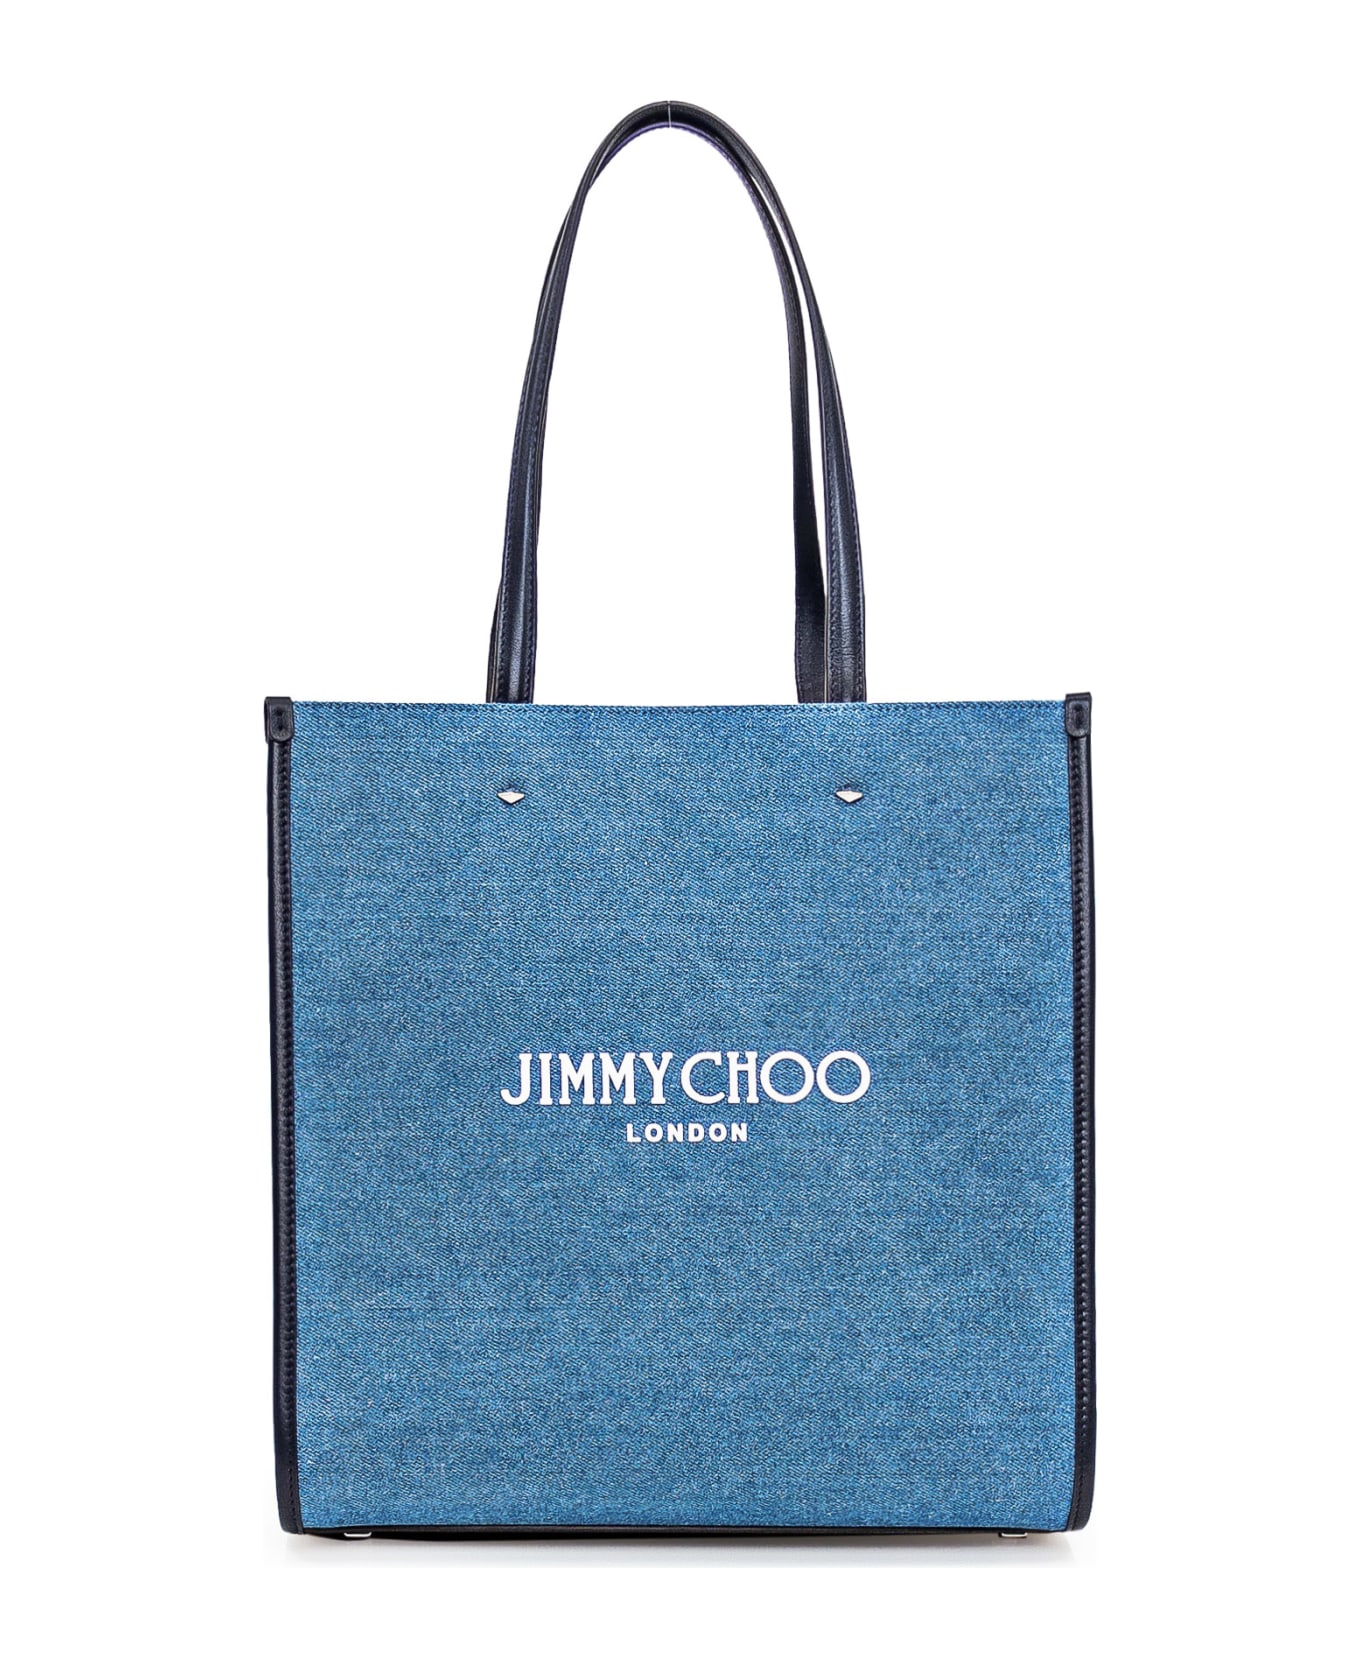 Jimmy Choo Tote Bag M - DENIM/NAVY/WHITE/SILVER トートバッグ